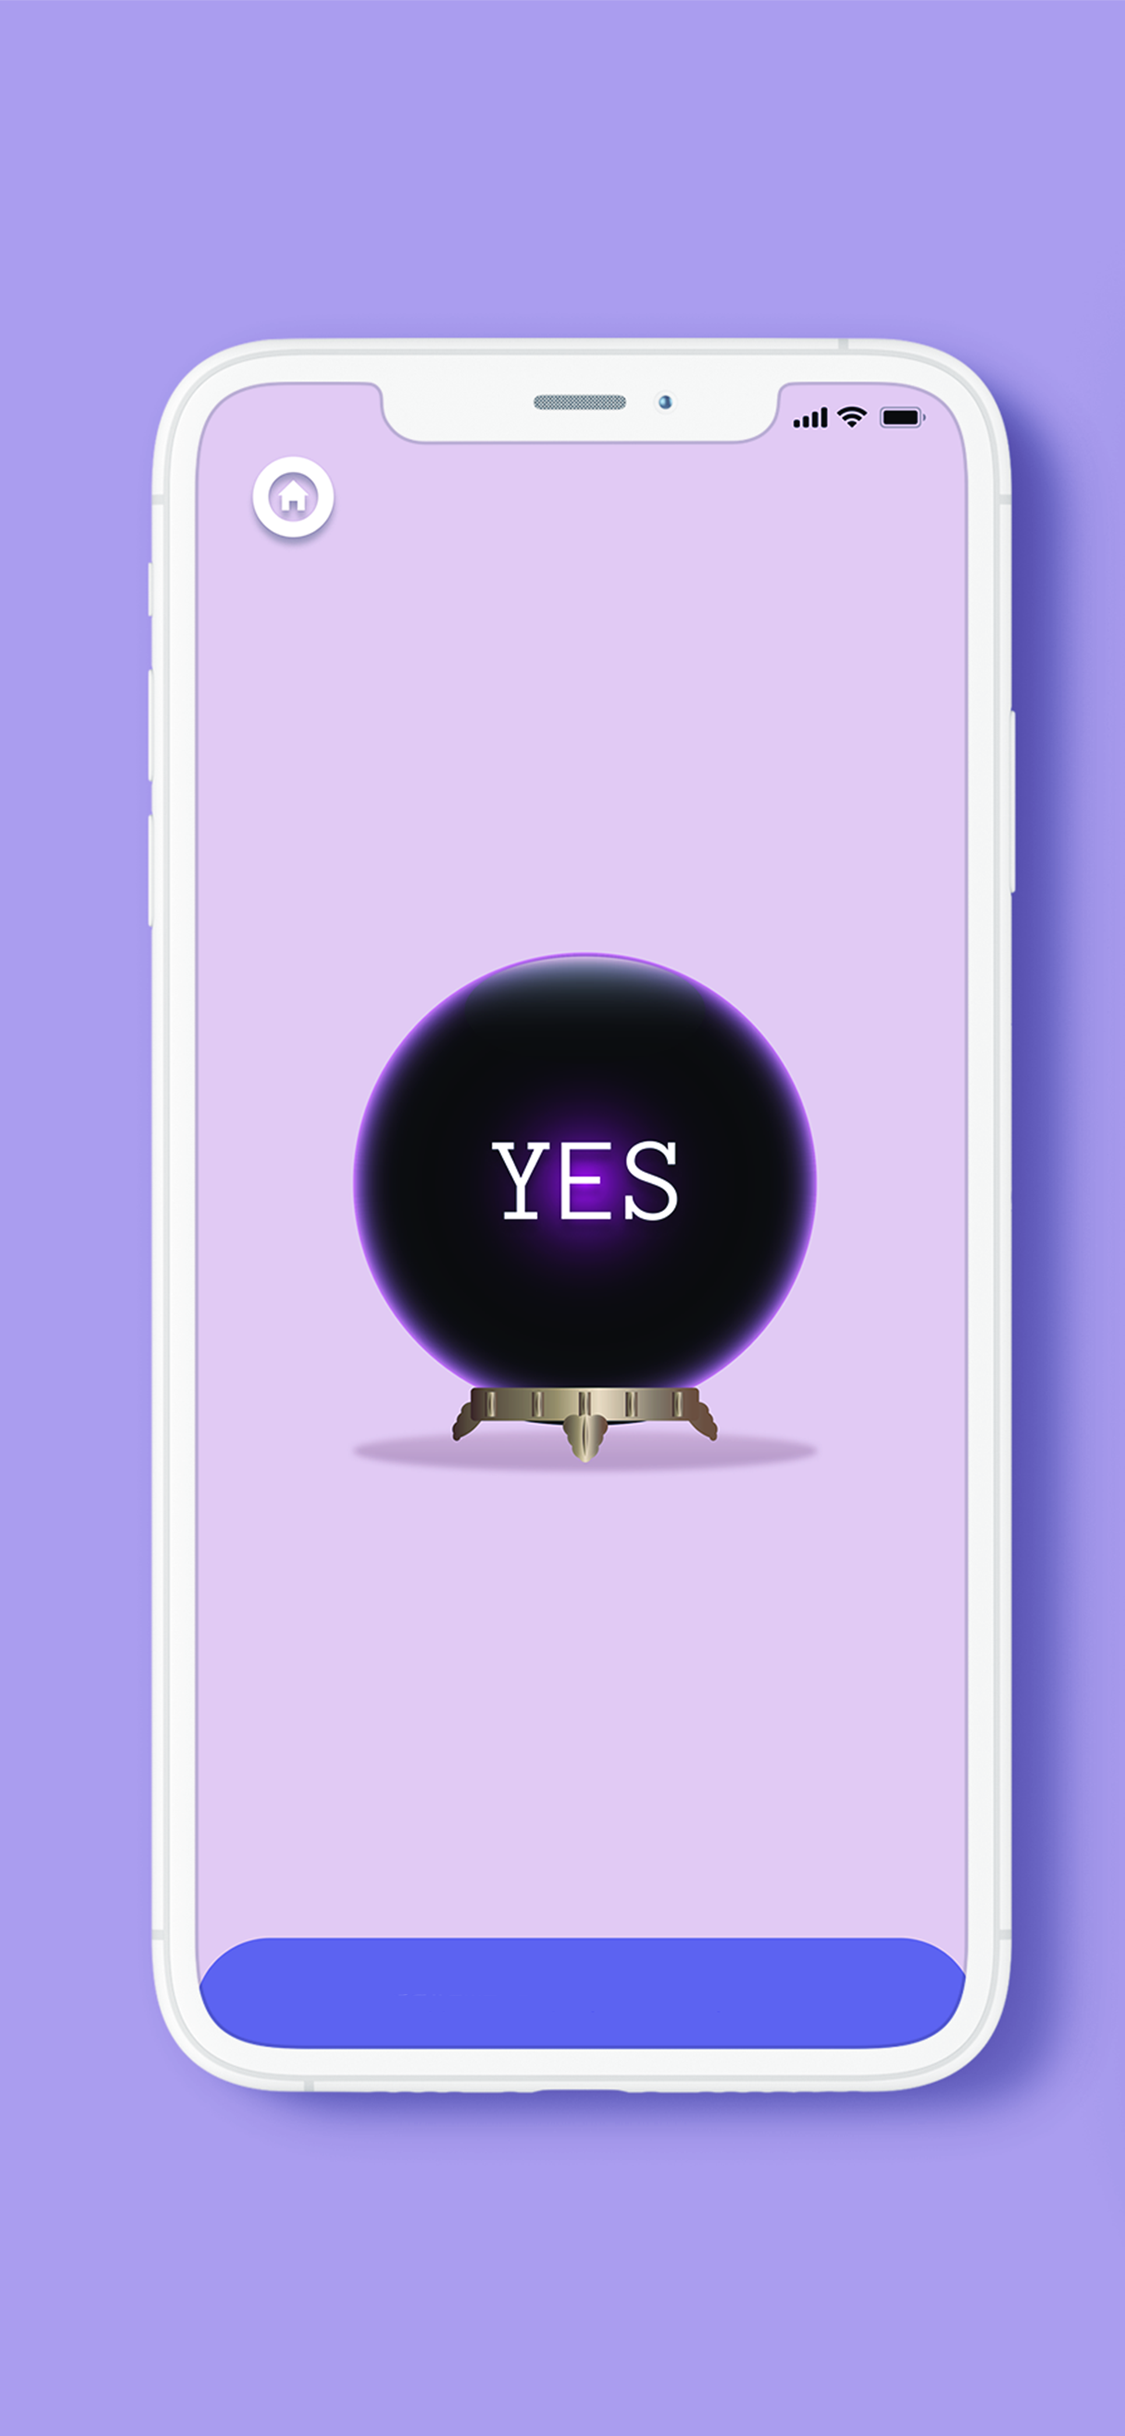 Magic Ball: yes or no